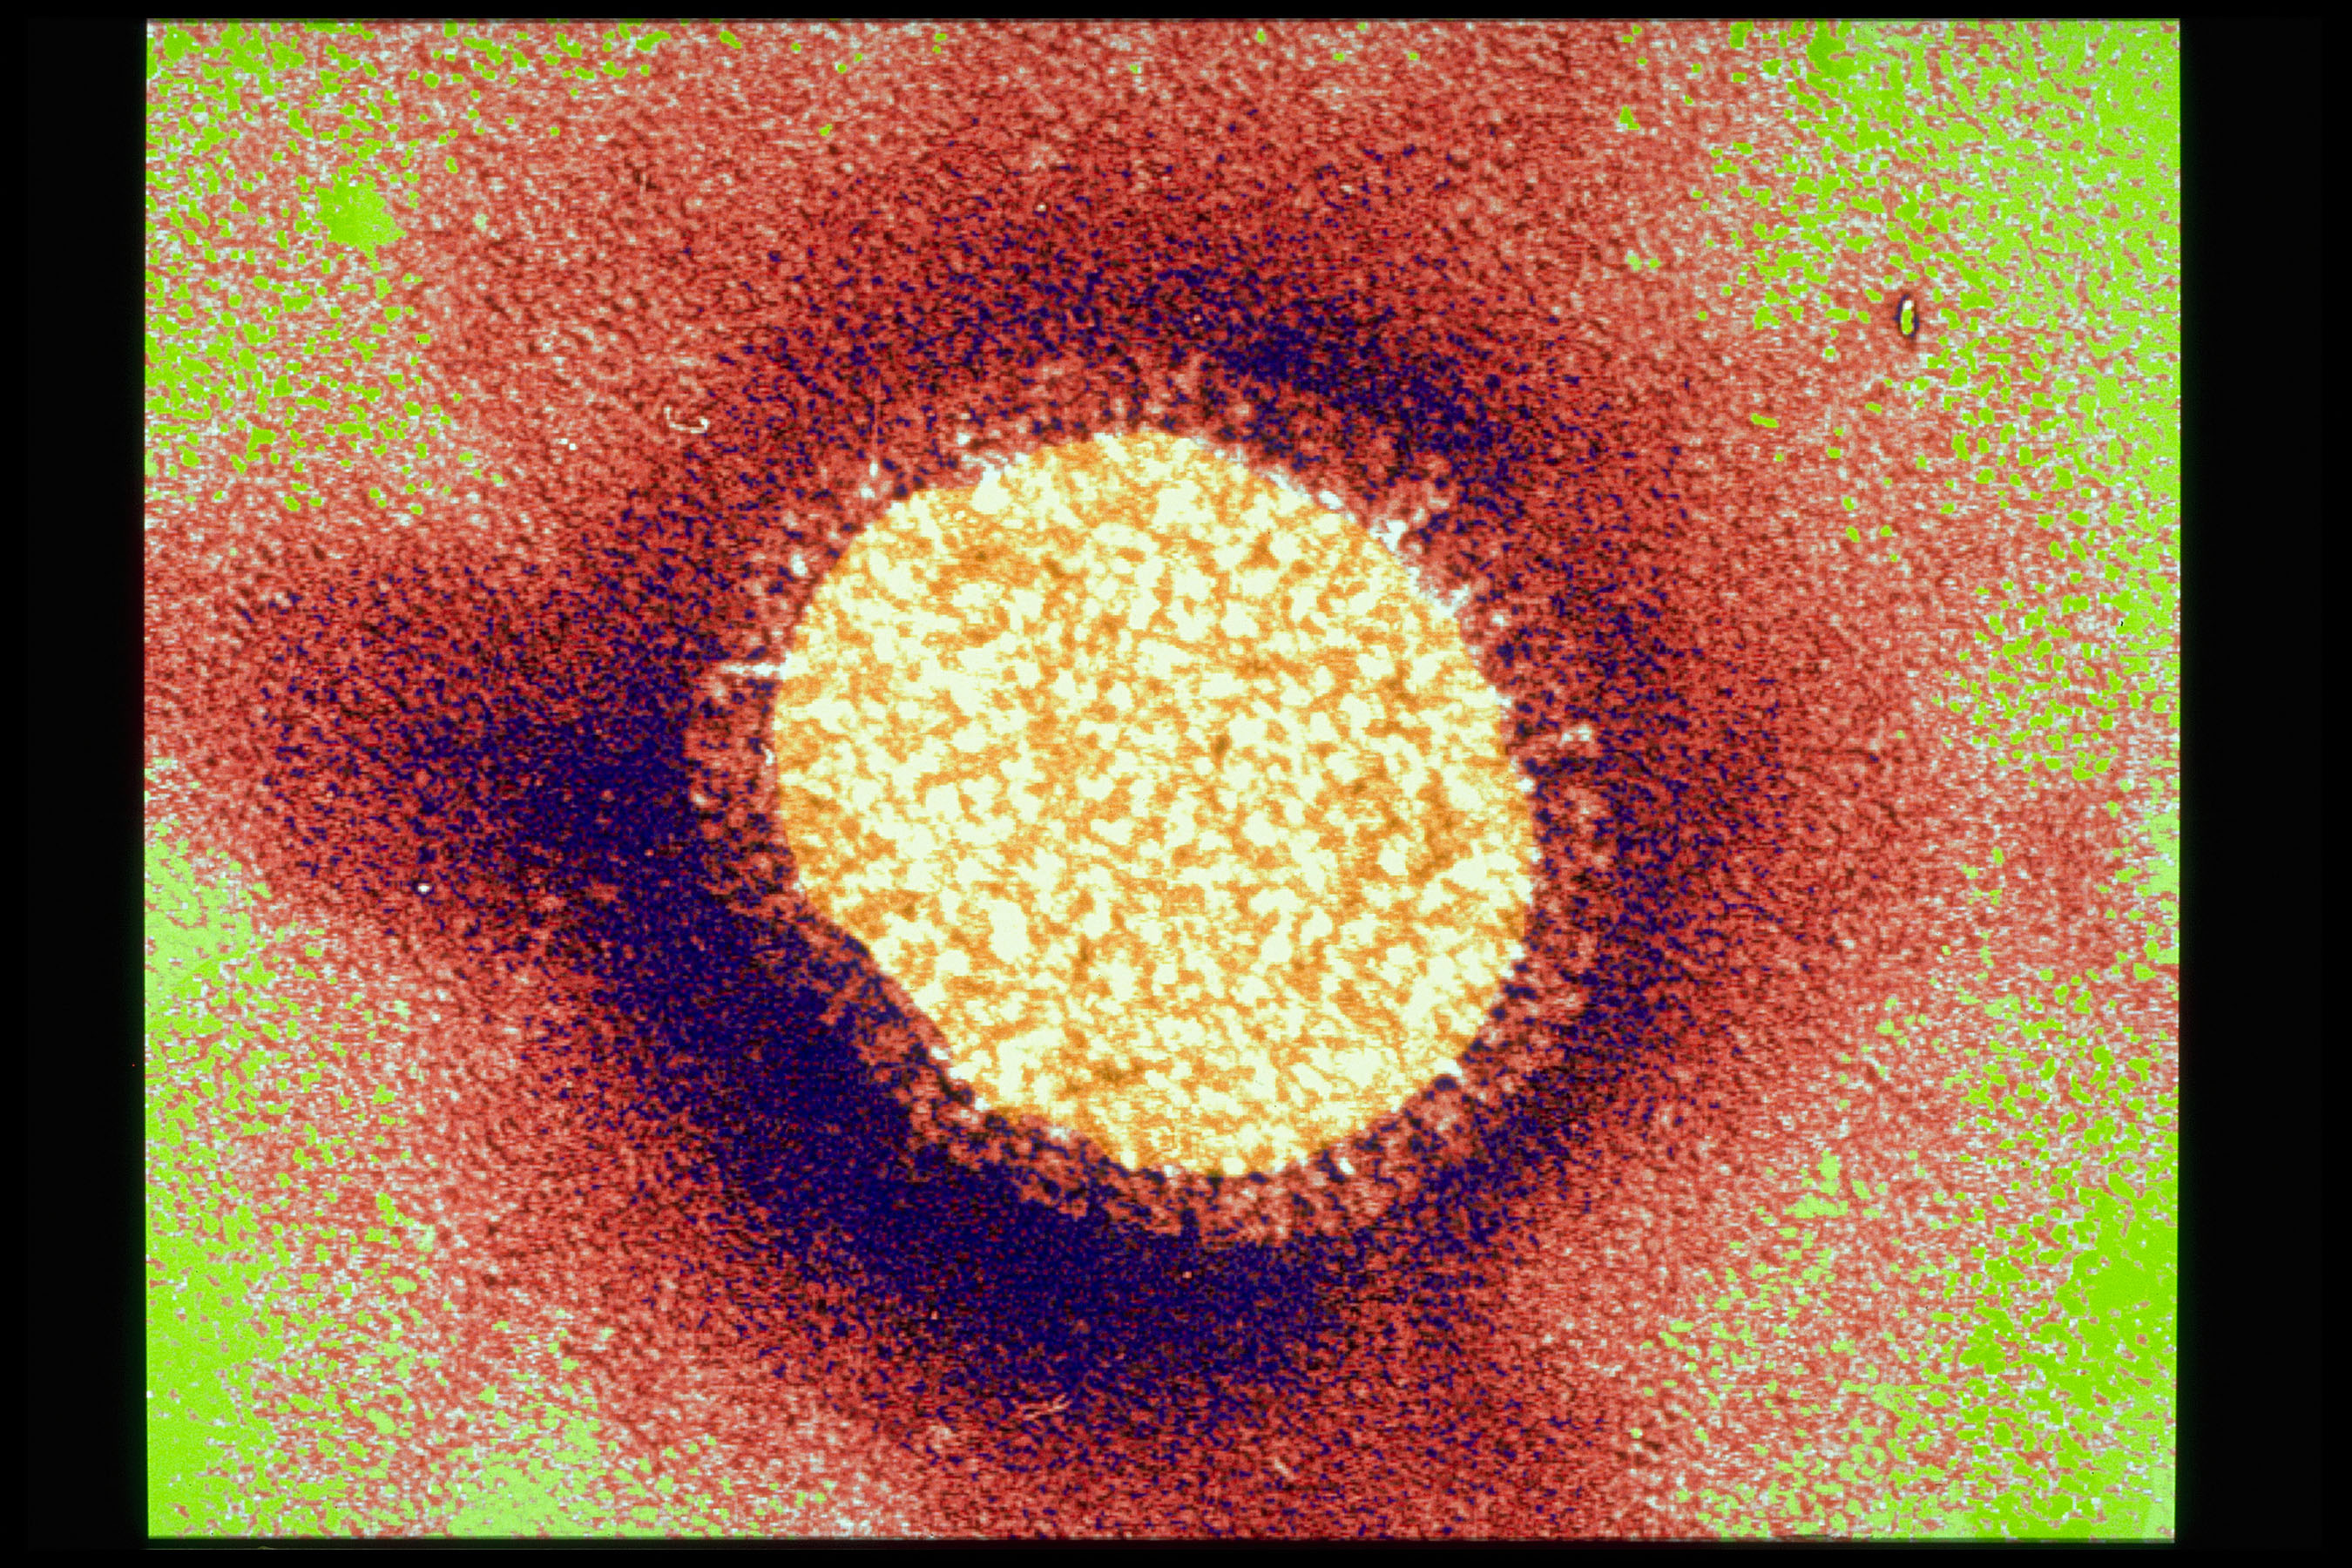 A closer look at the influenza virus